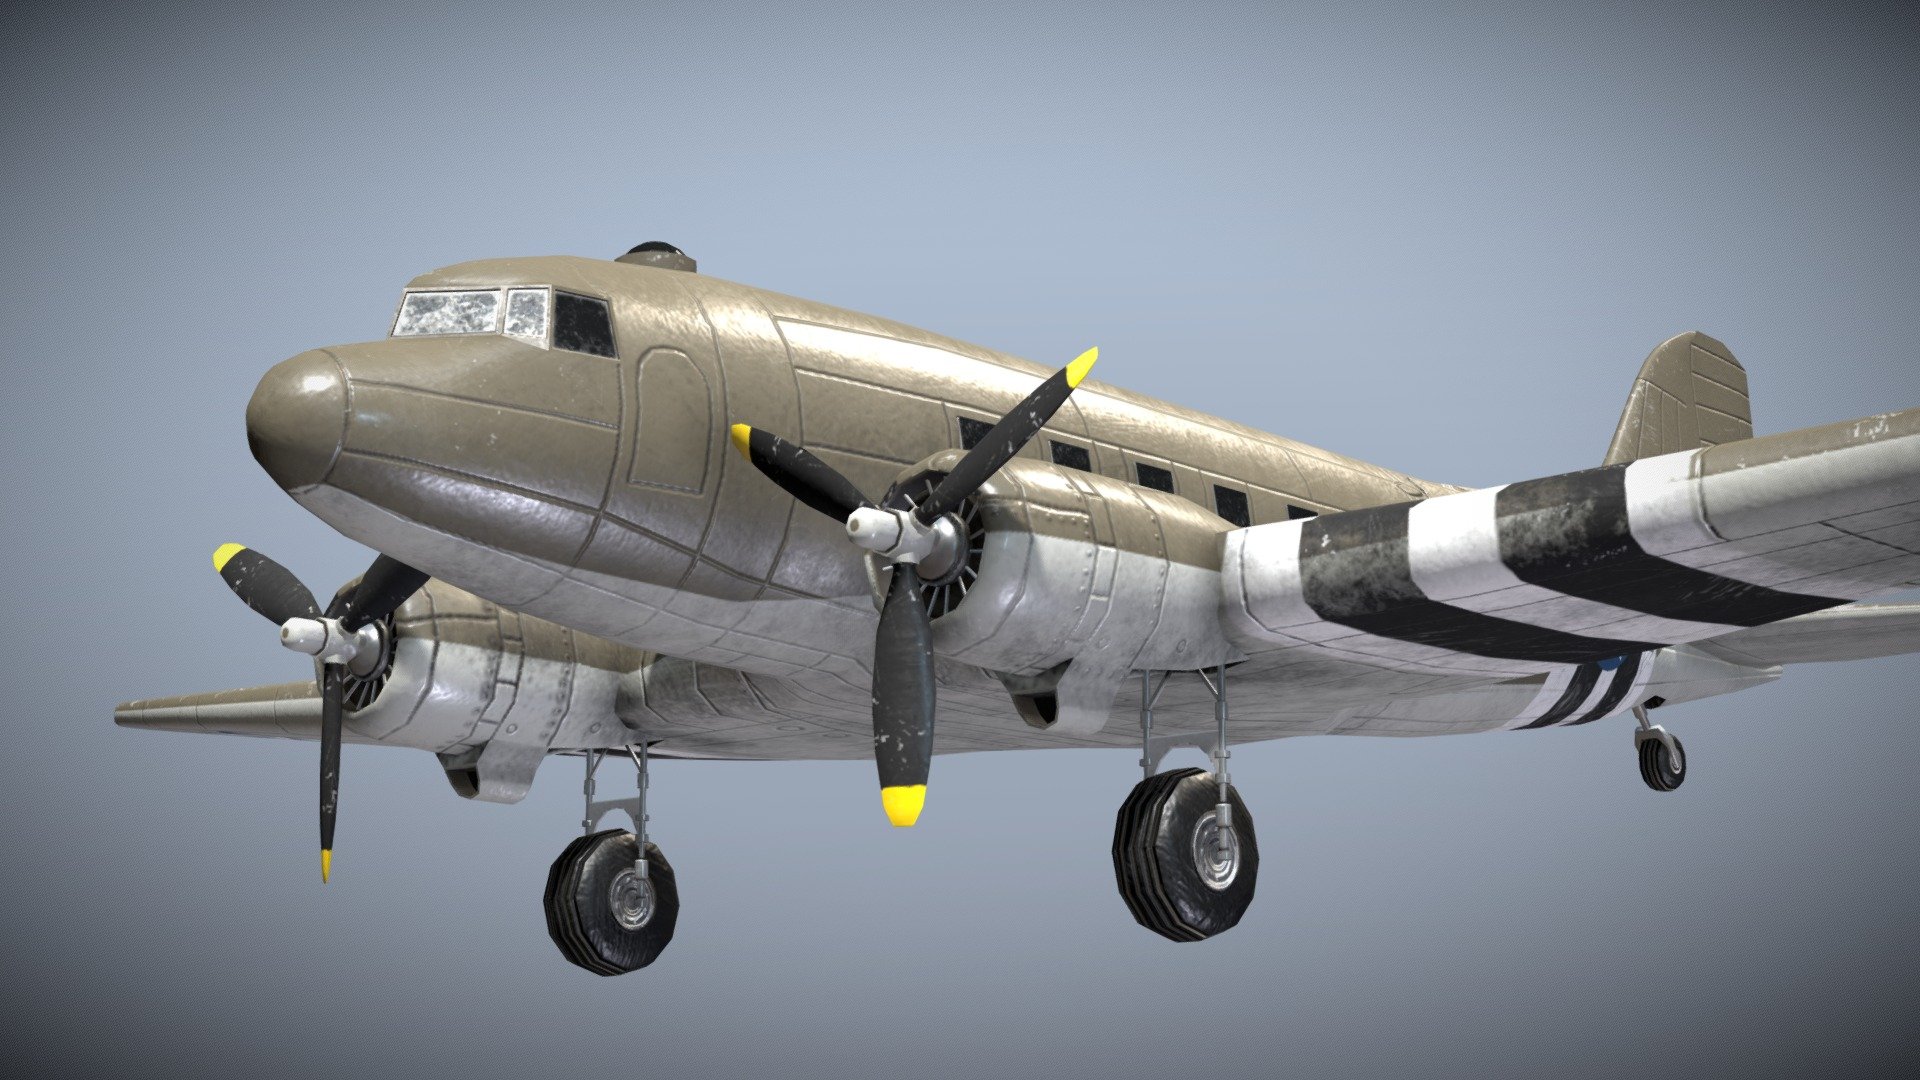 WW2 US Military Transport Aircraft C-47 Skytrain